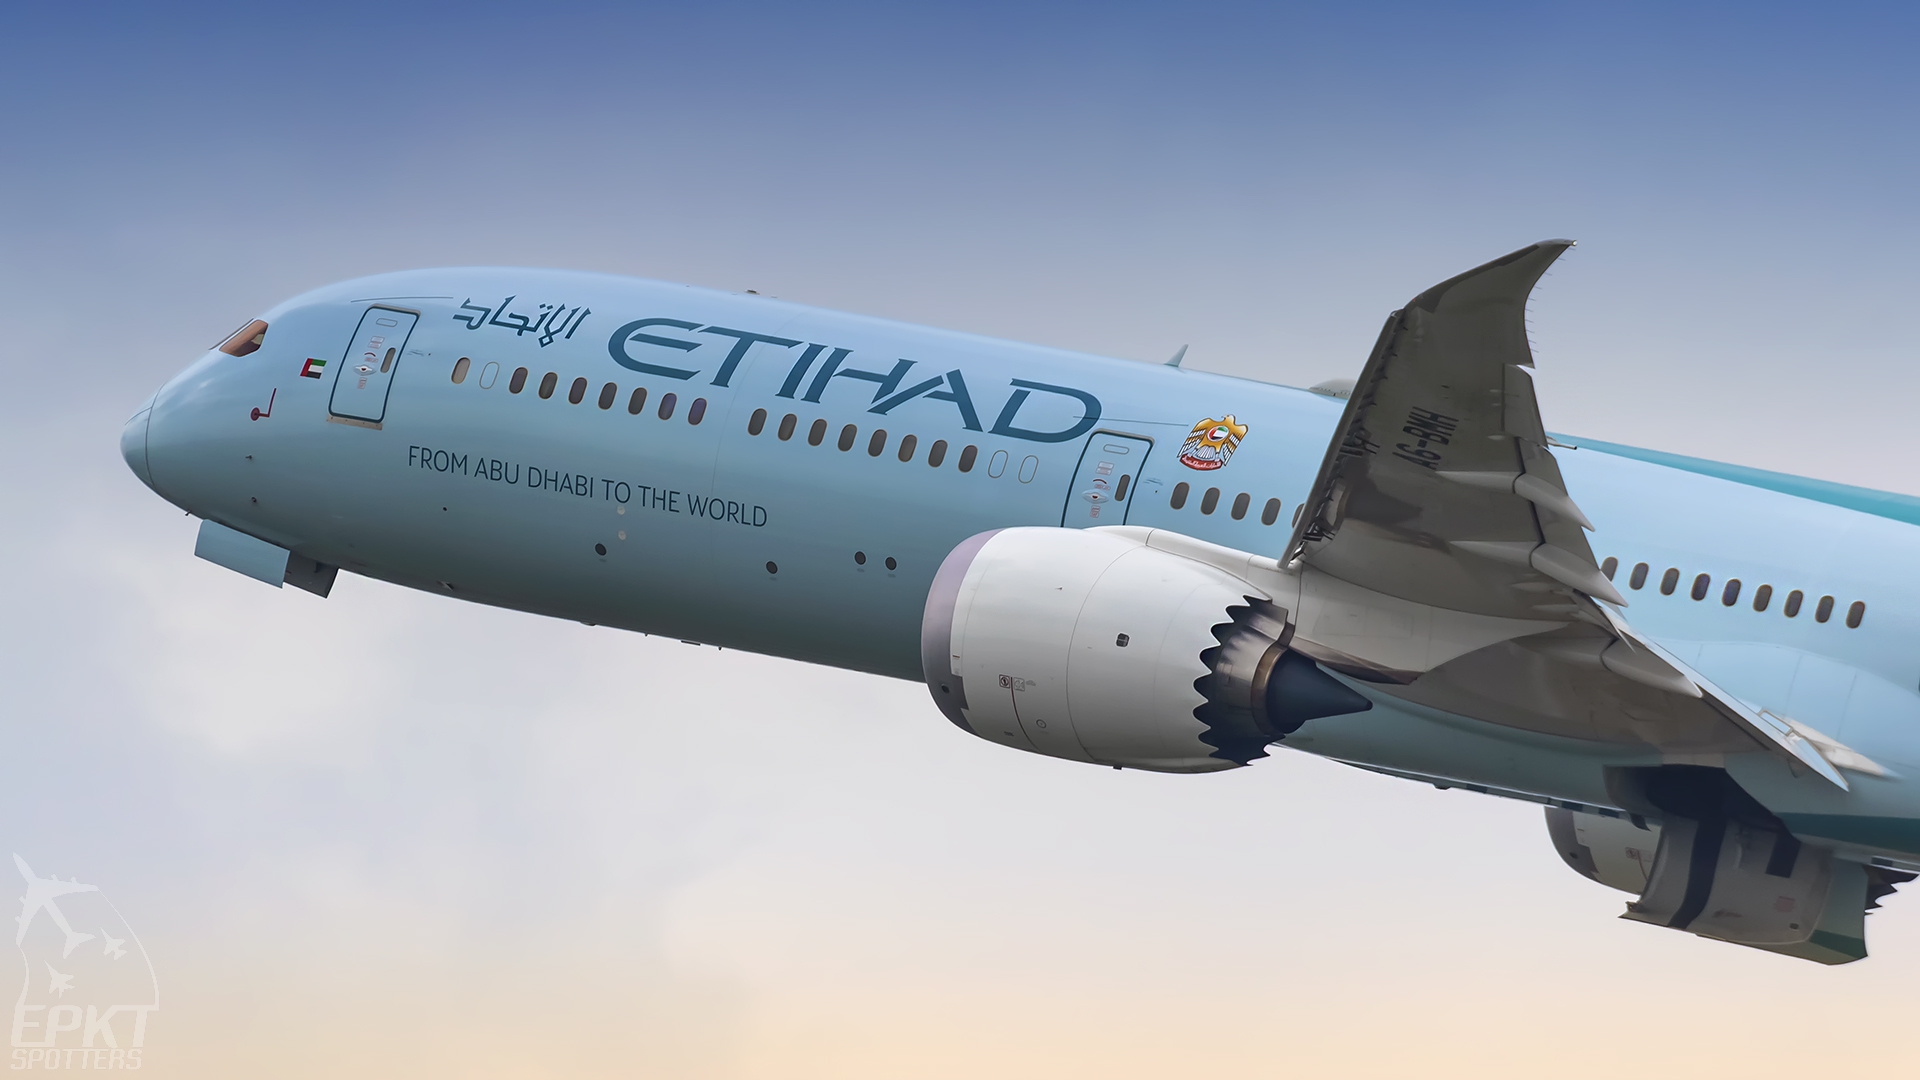 A6-BMH - Boeing 787 -10 Dreamliner (Etihad Airways) / Amsterdam Airport Schiphol - Amsterdam Netherlands [EHAM/AMS]